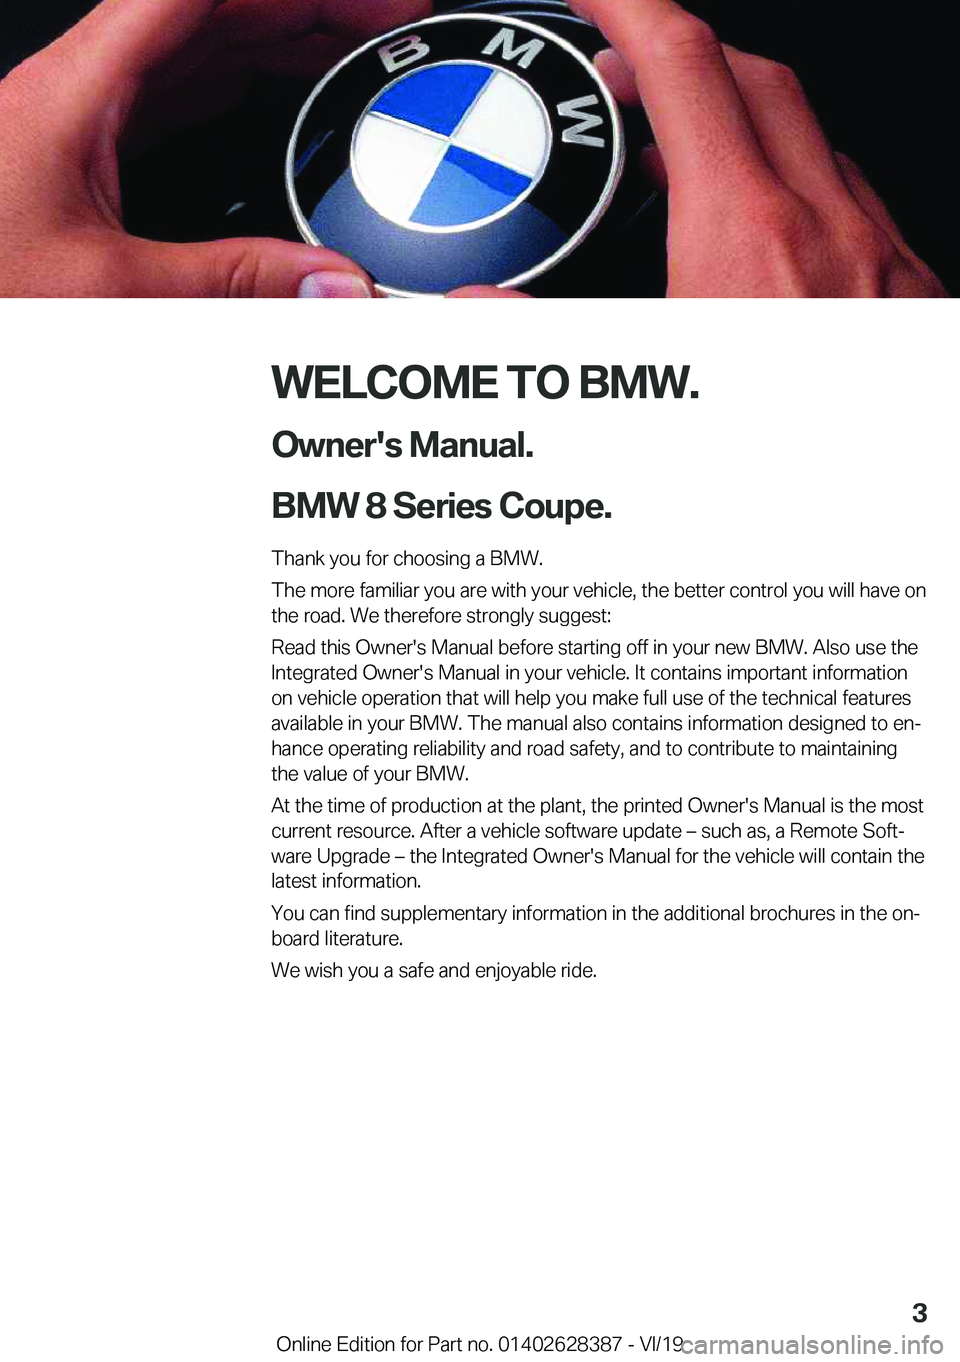 BMW 8 SERIES COUPE 2020  Owners Manual �W�E�L�C�O�M�E��T�O��B�M�W�.�O�w�n�e�r�'�s��M�a�n�u�a�l�.
�B�M�W��8��S�e�r�i�e�s��C�o�u�p�e�.
�T�h�a�n�k��y�o�u��f�o�r��c�h�o�o�s�i�n�g��a��B�M�W�.
�T�h�e��m�o�r�e��f�a�m�i�l�i�a�r��